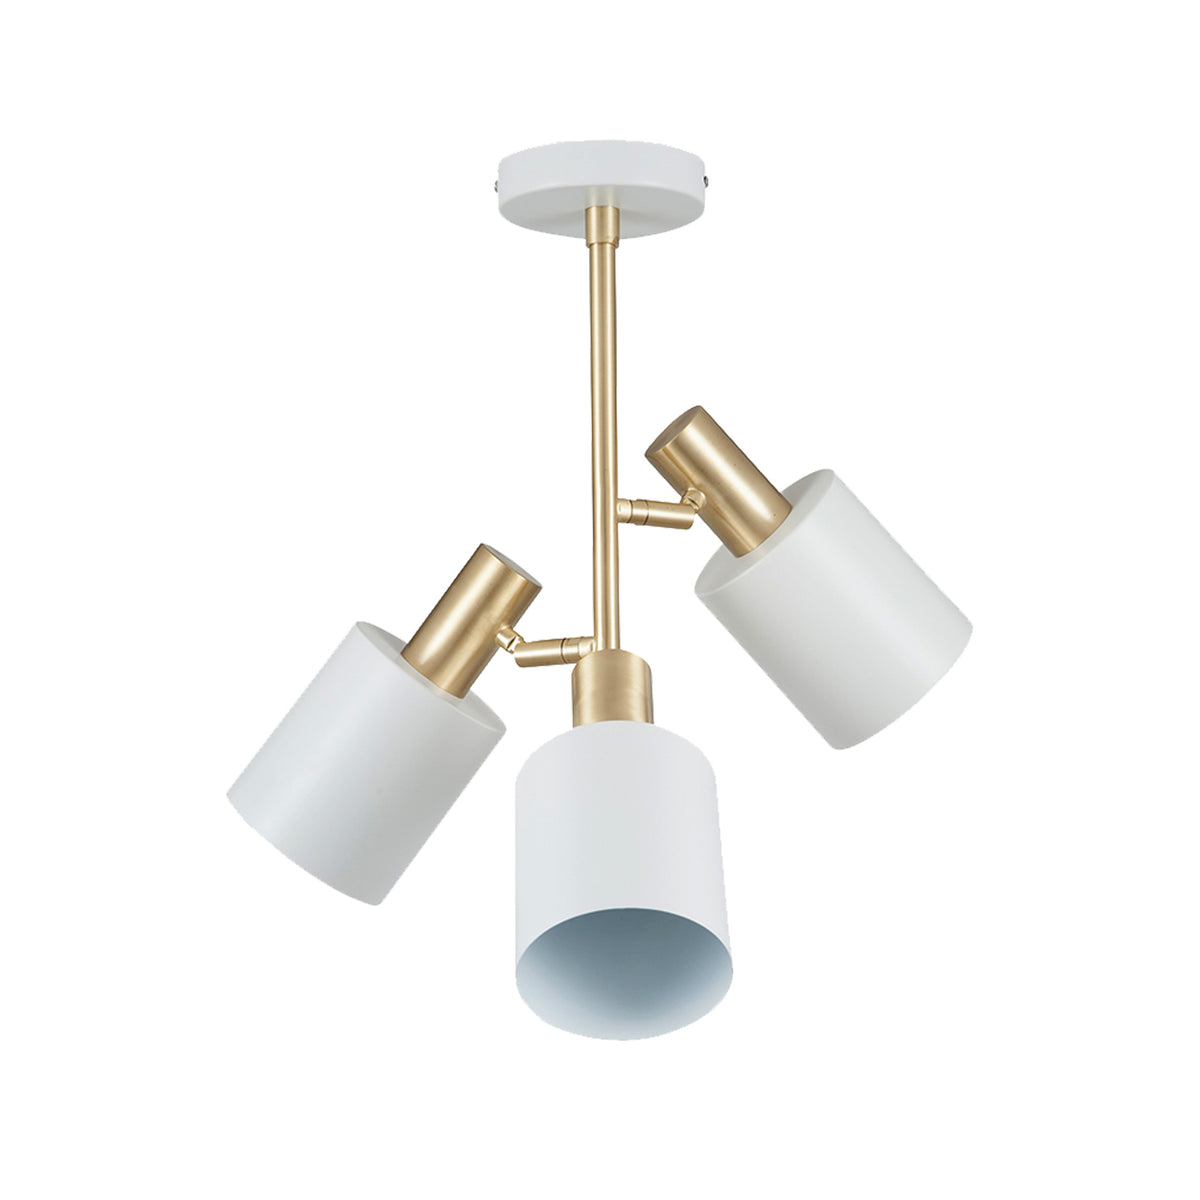 Biba White & Brass 3 Light Electrified Pendant from Roseland Furniture